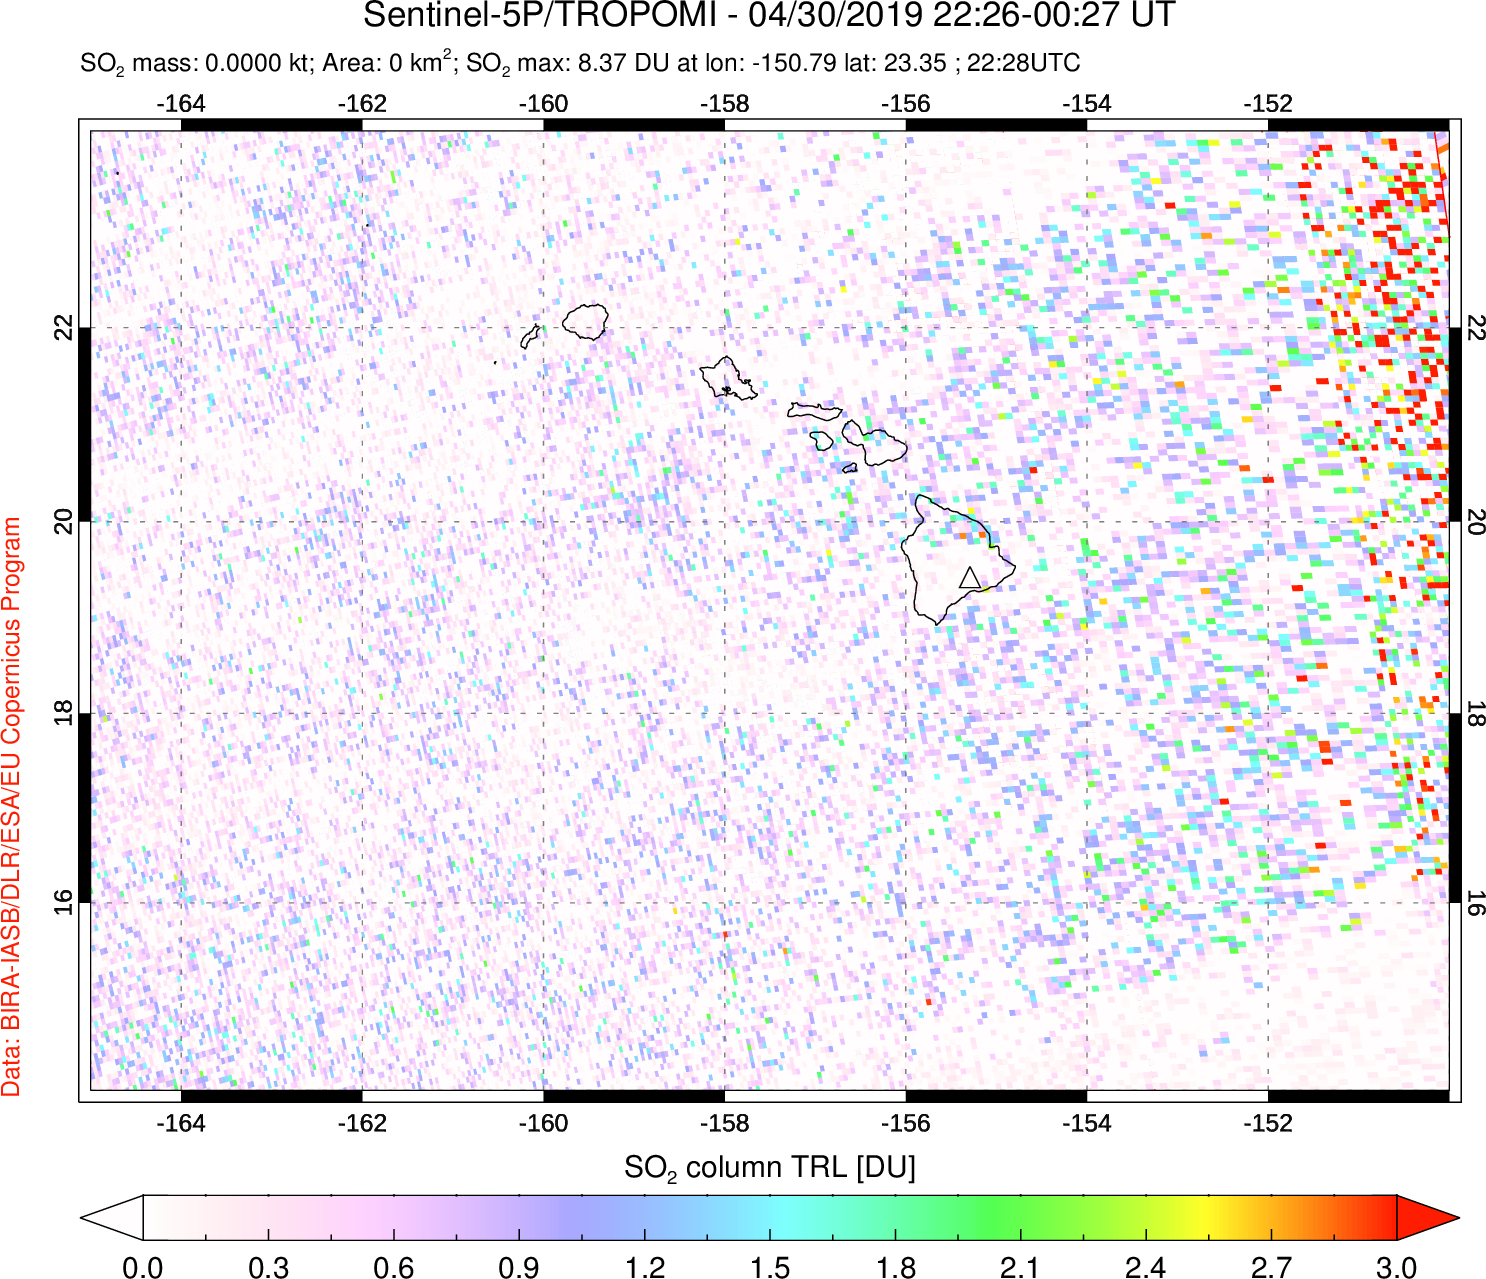 A sulfur dioxide image over Hawaii, USA on Apr 30, 2019.